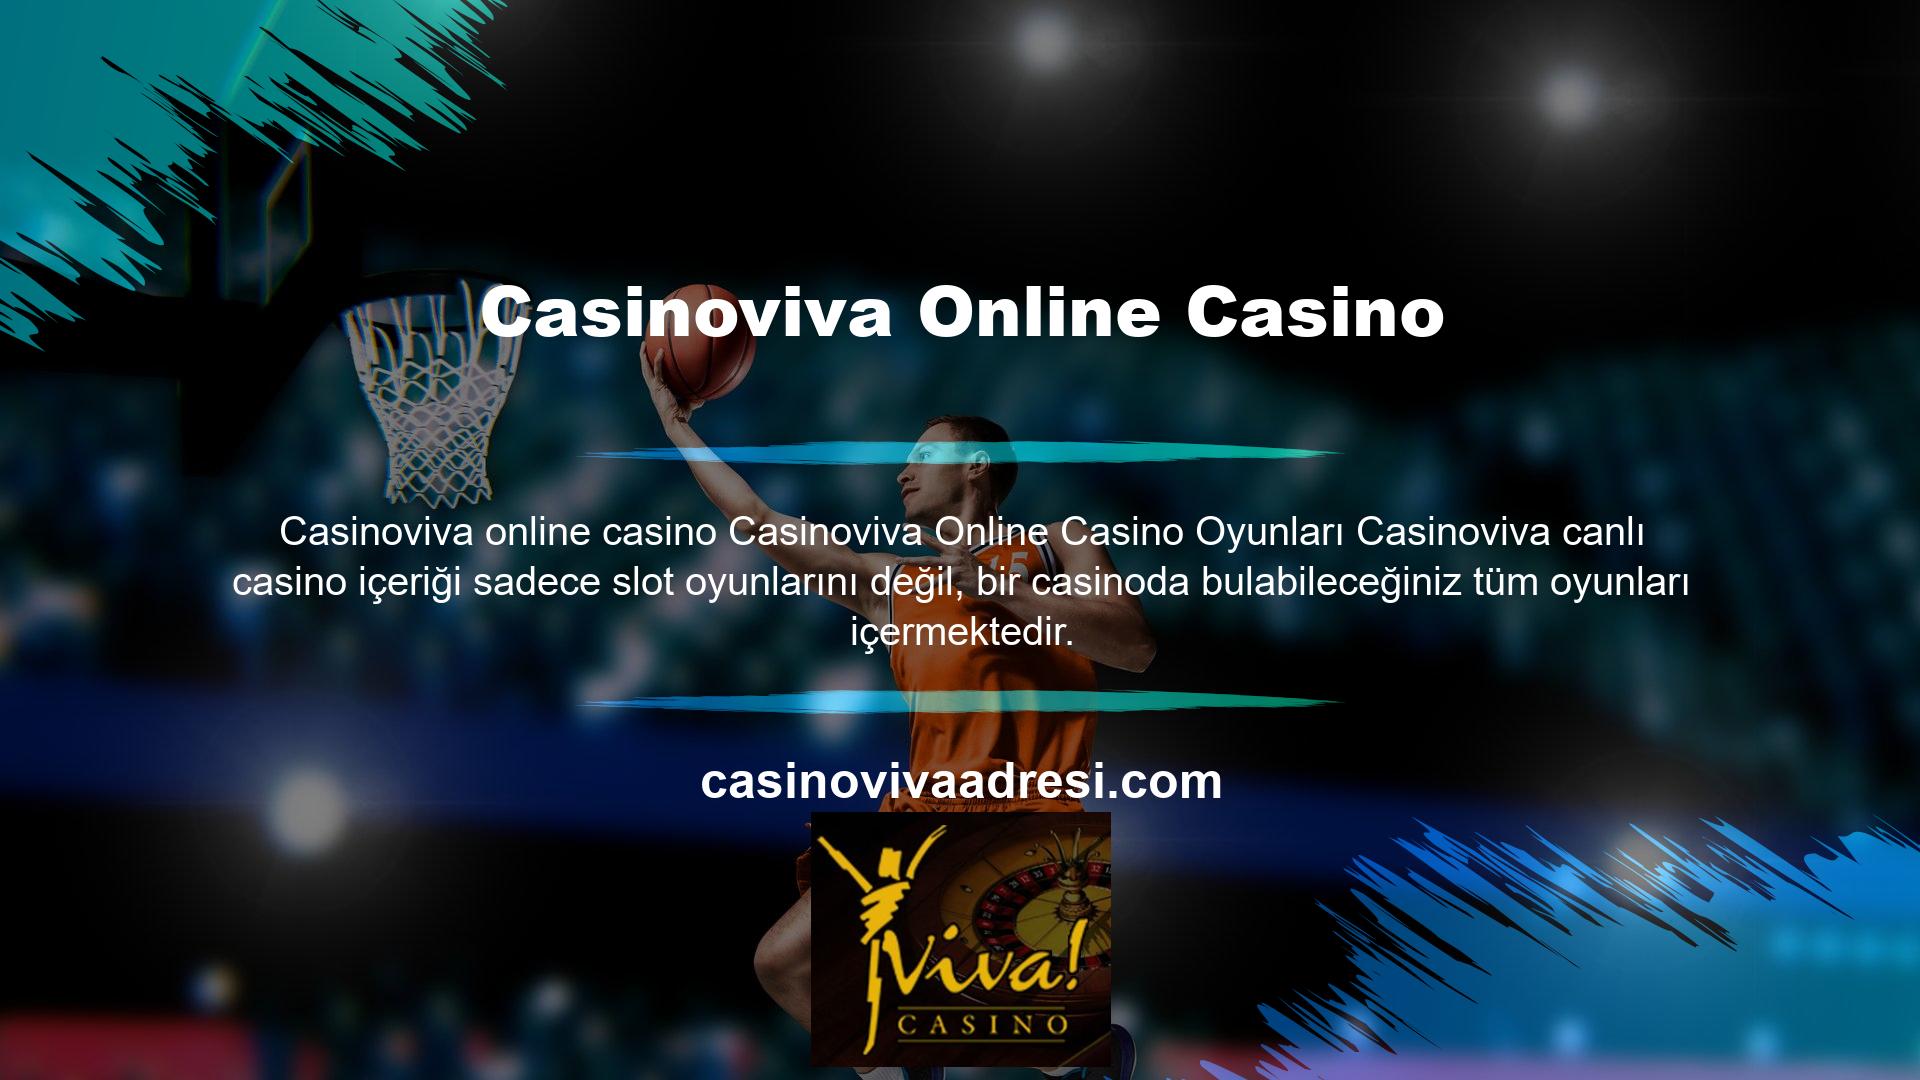 Casinoviva Online Casino